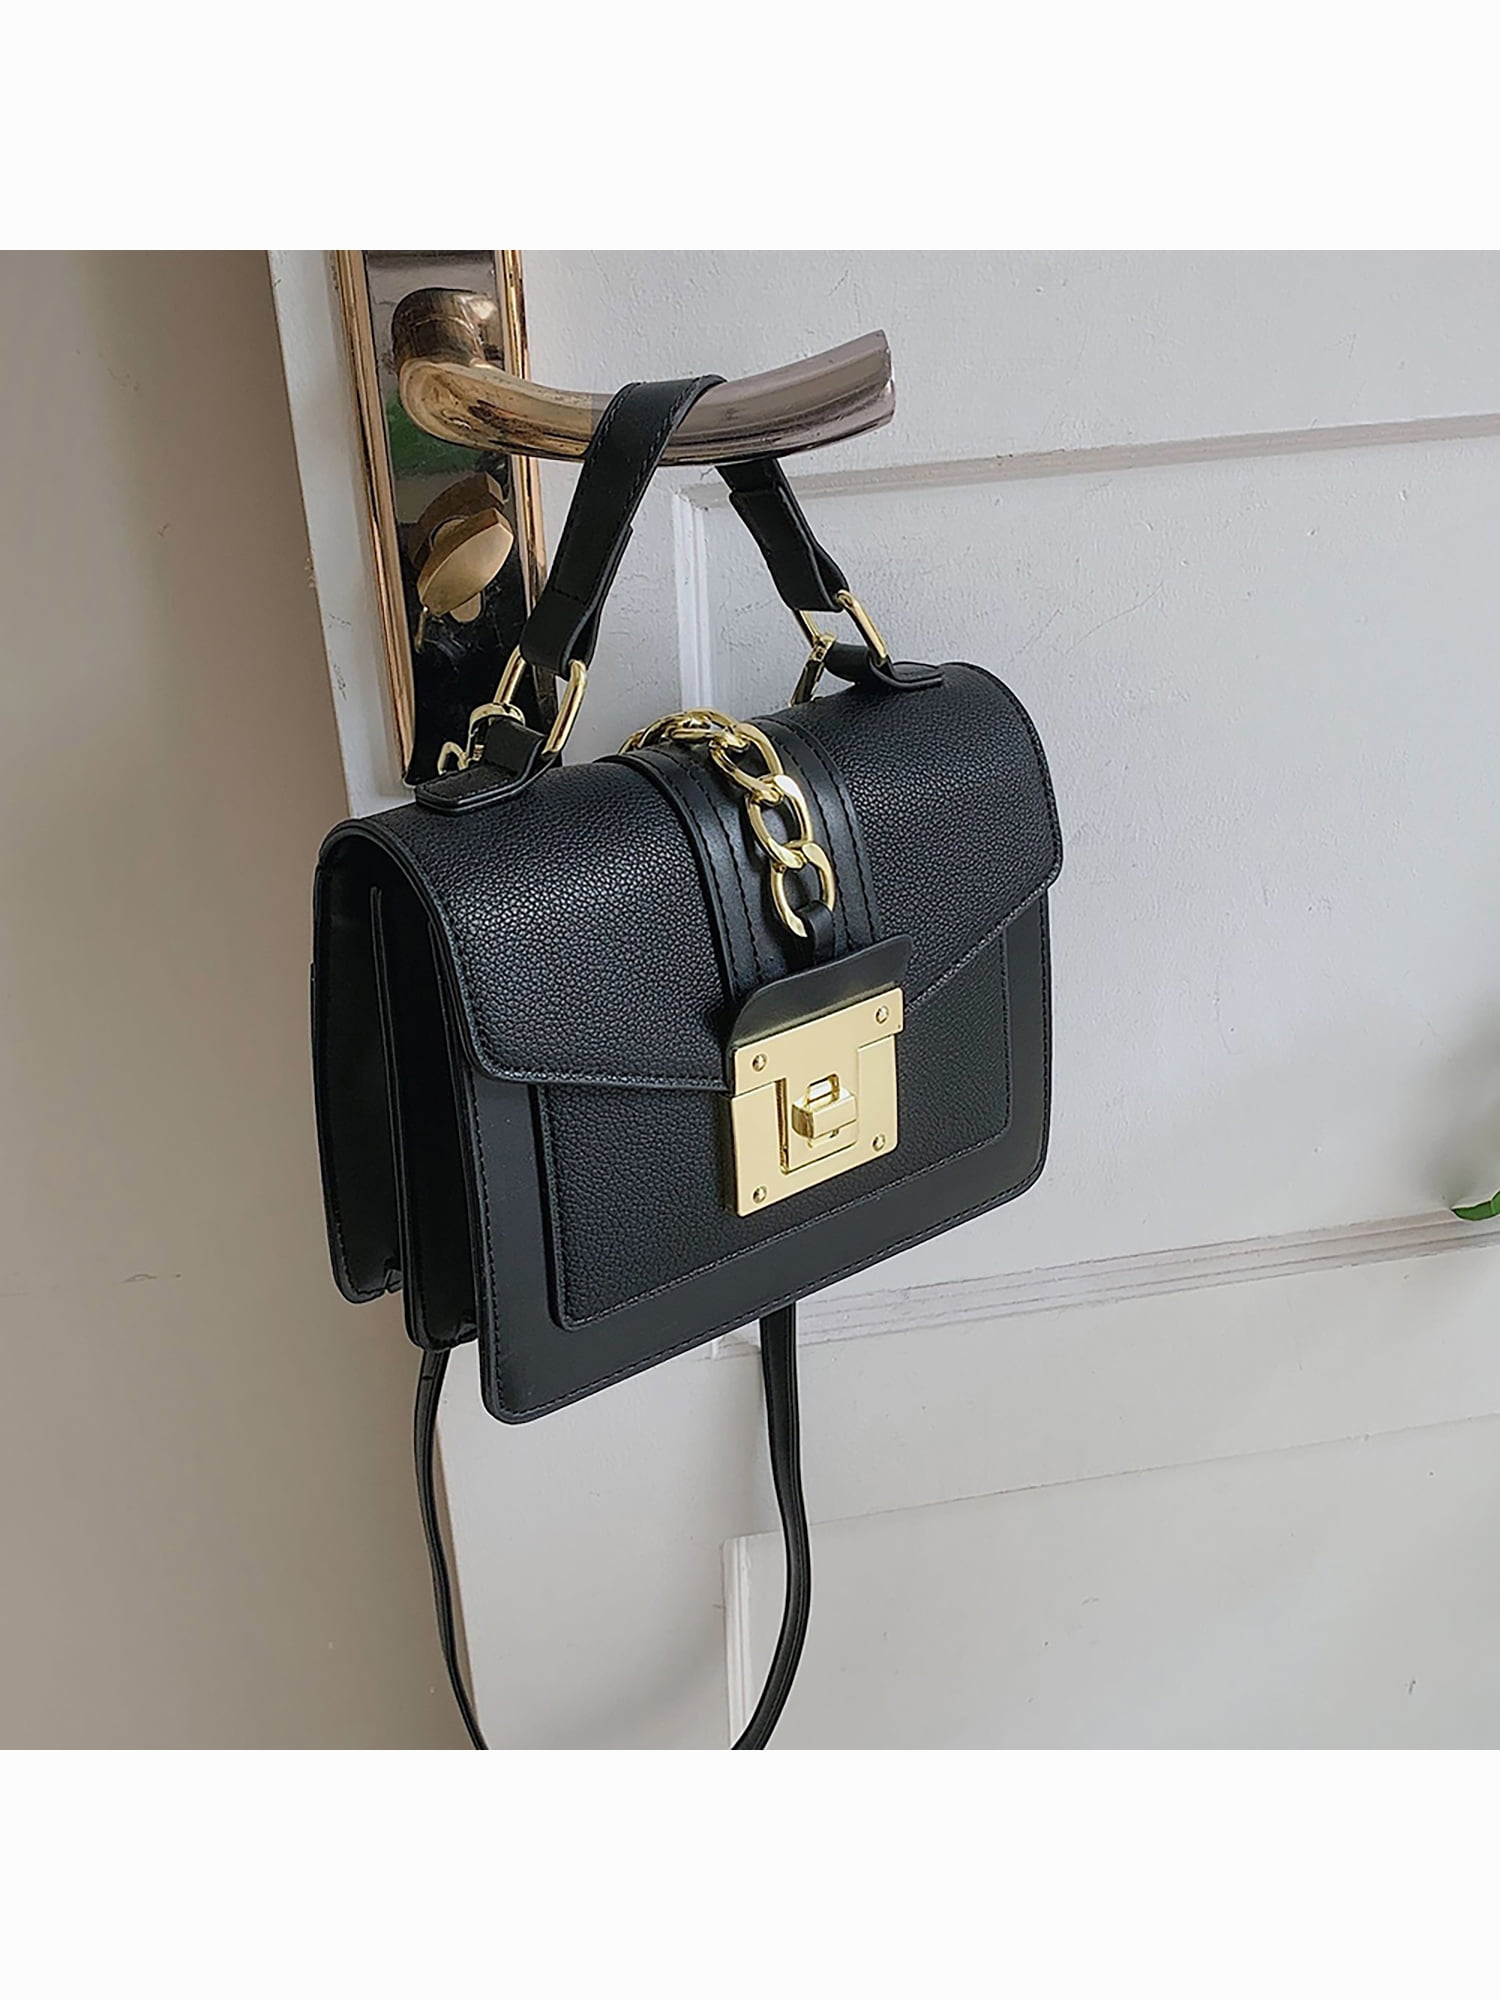 Ailizt Women's Designer Handbags Crossbody Shoulder Bags